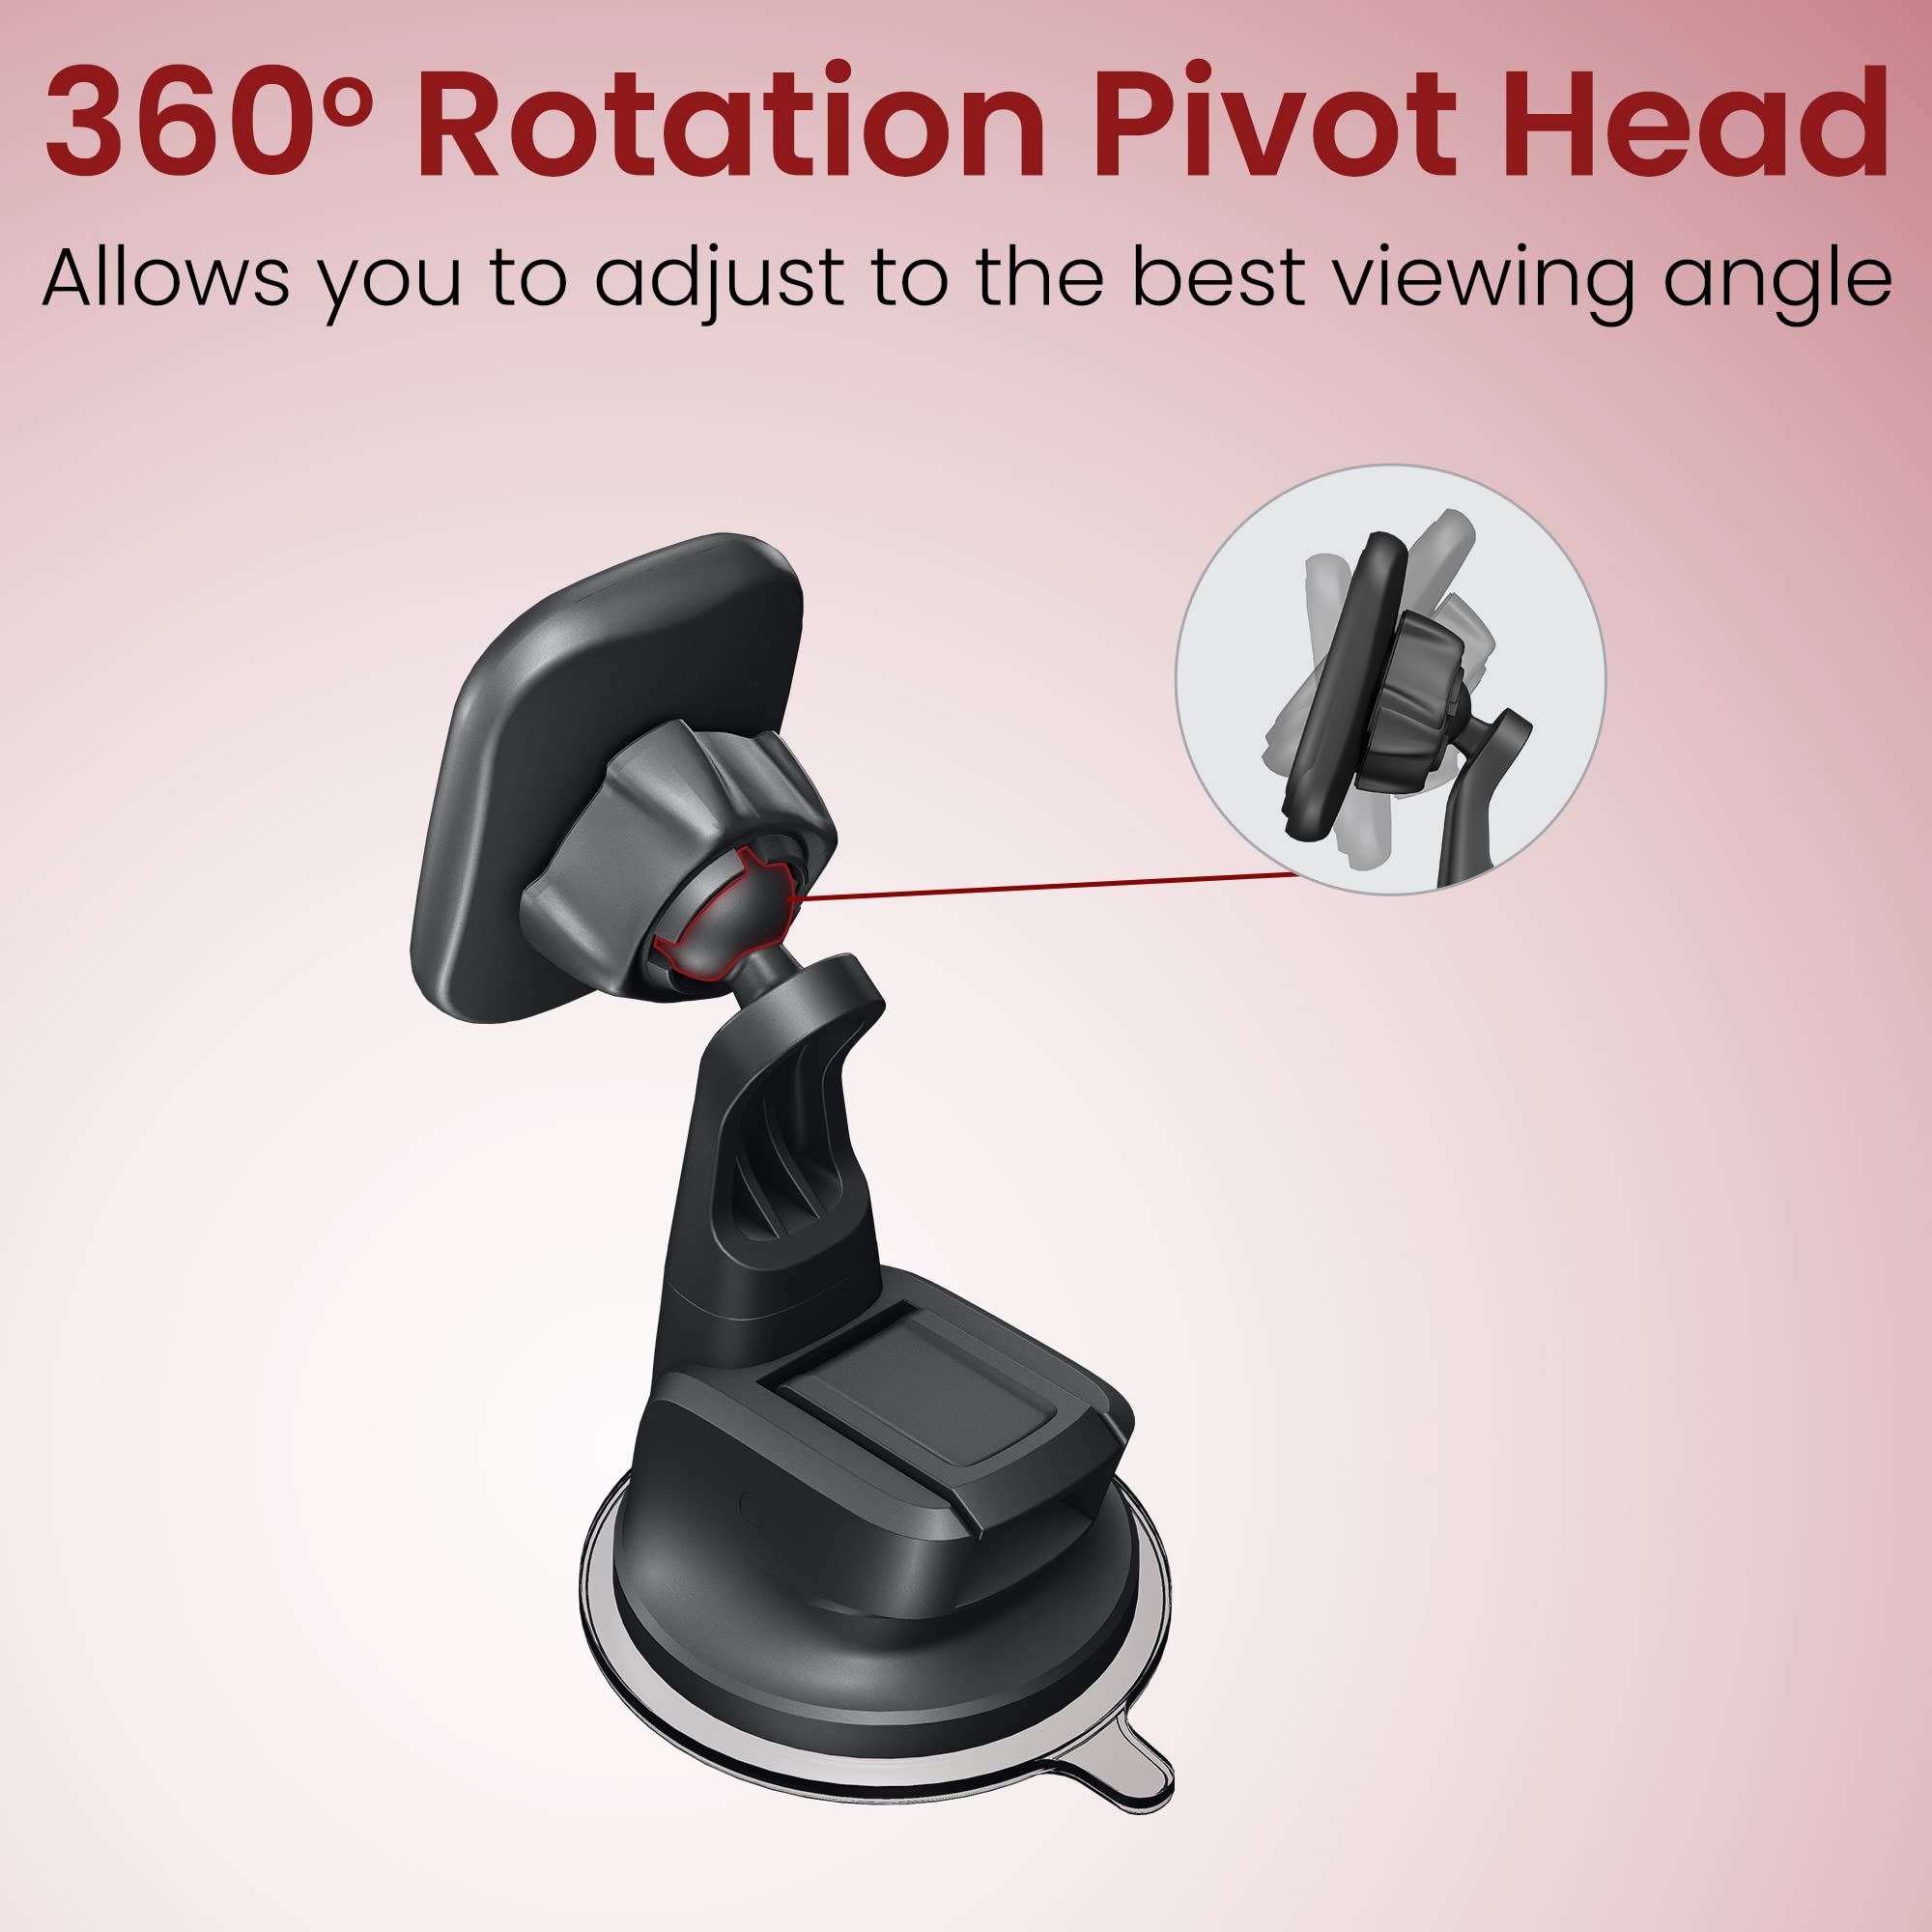 Moxedo Magnetic Car Mount Dashboard Phone Holder Suction Base Adjustable 360 Degree Rotation